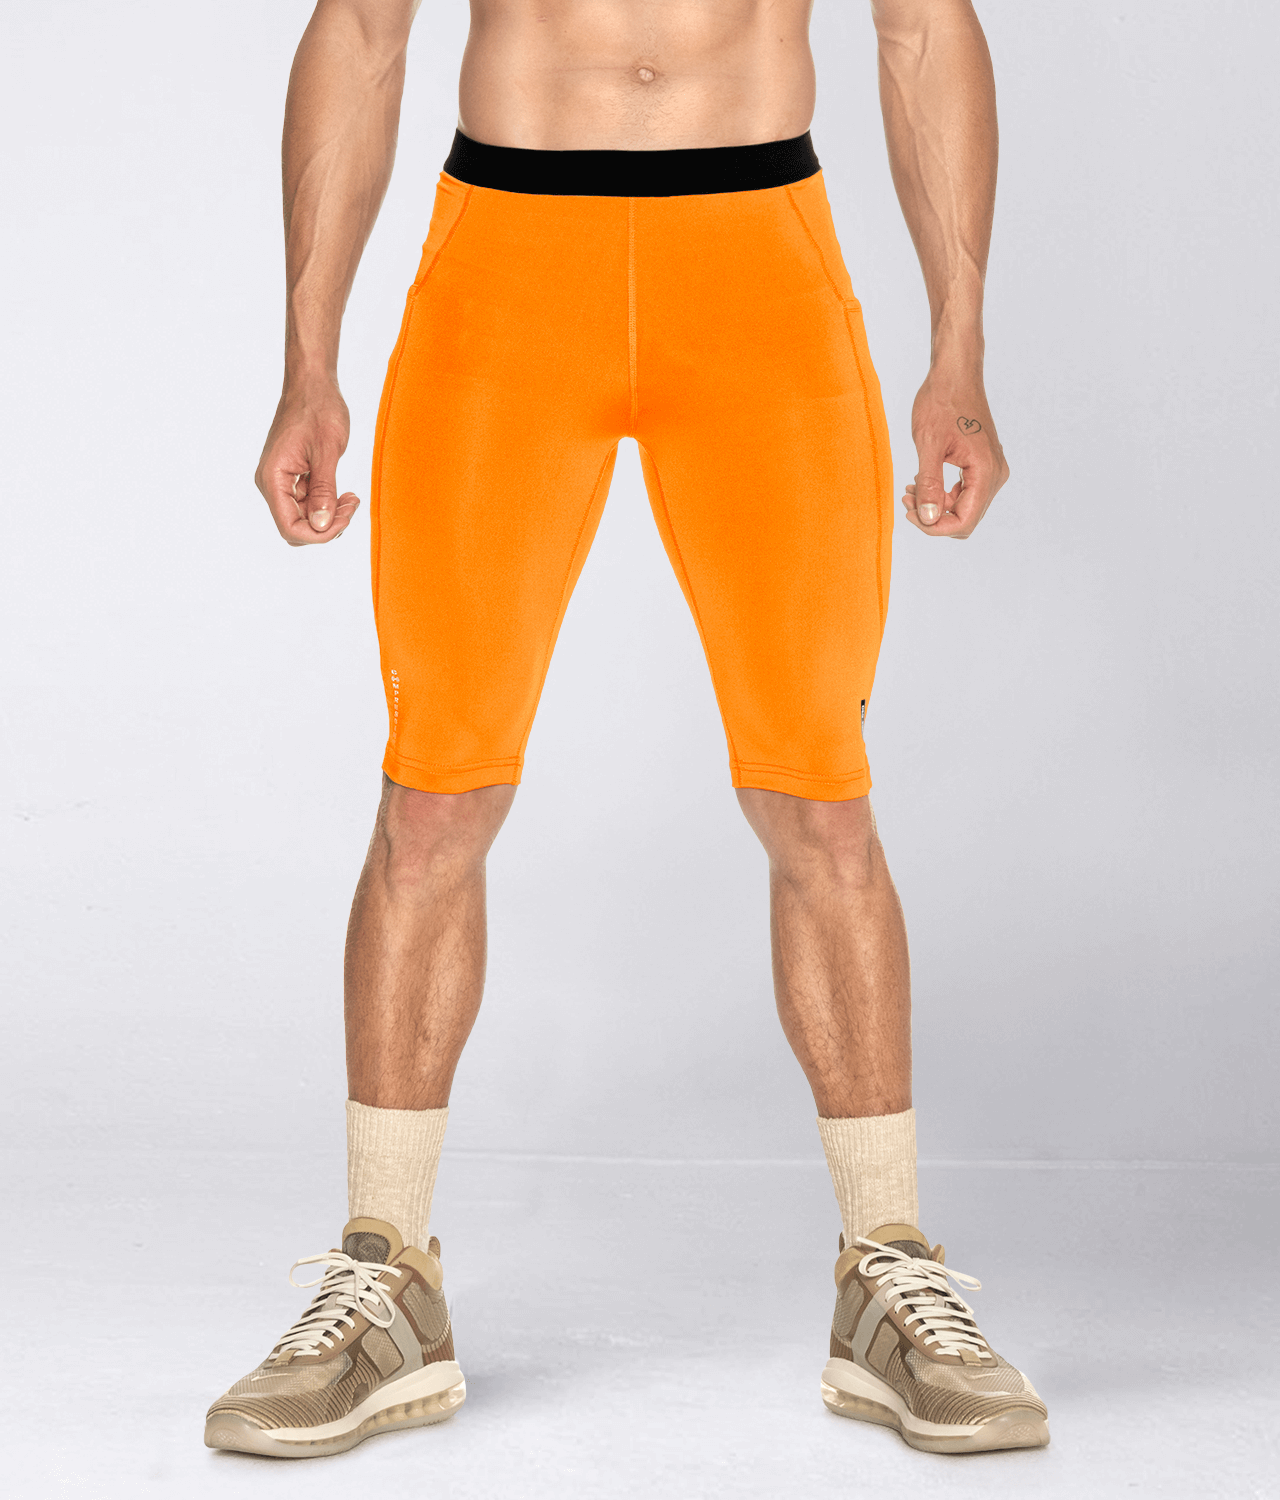 Born Tough Mens Gym Compression Shorts Orange - Elite Sports – Elite Sports